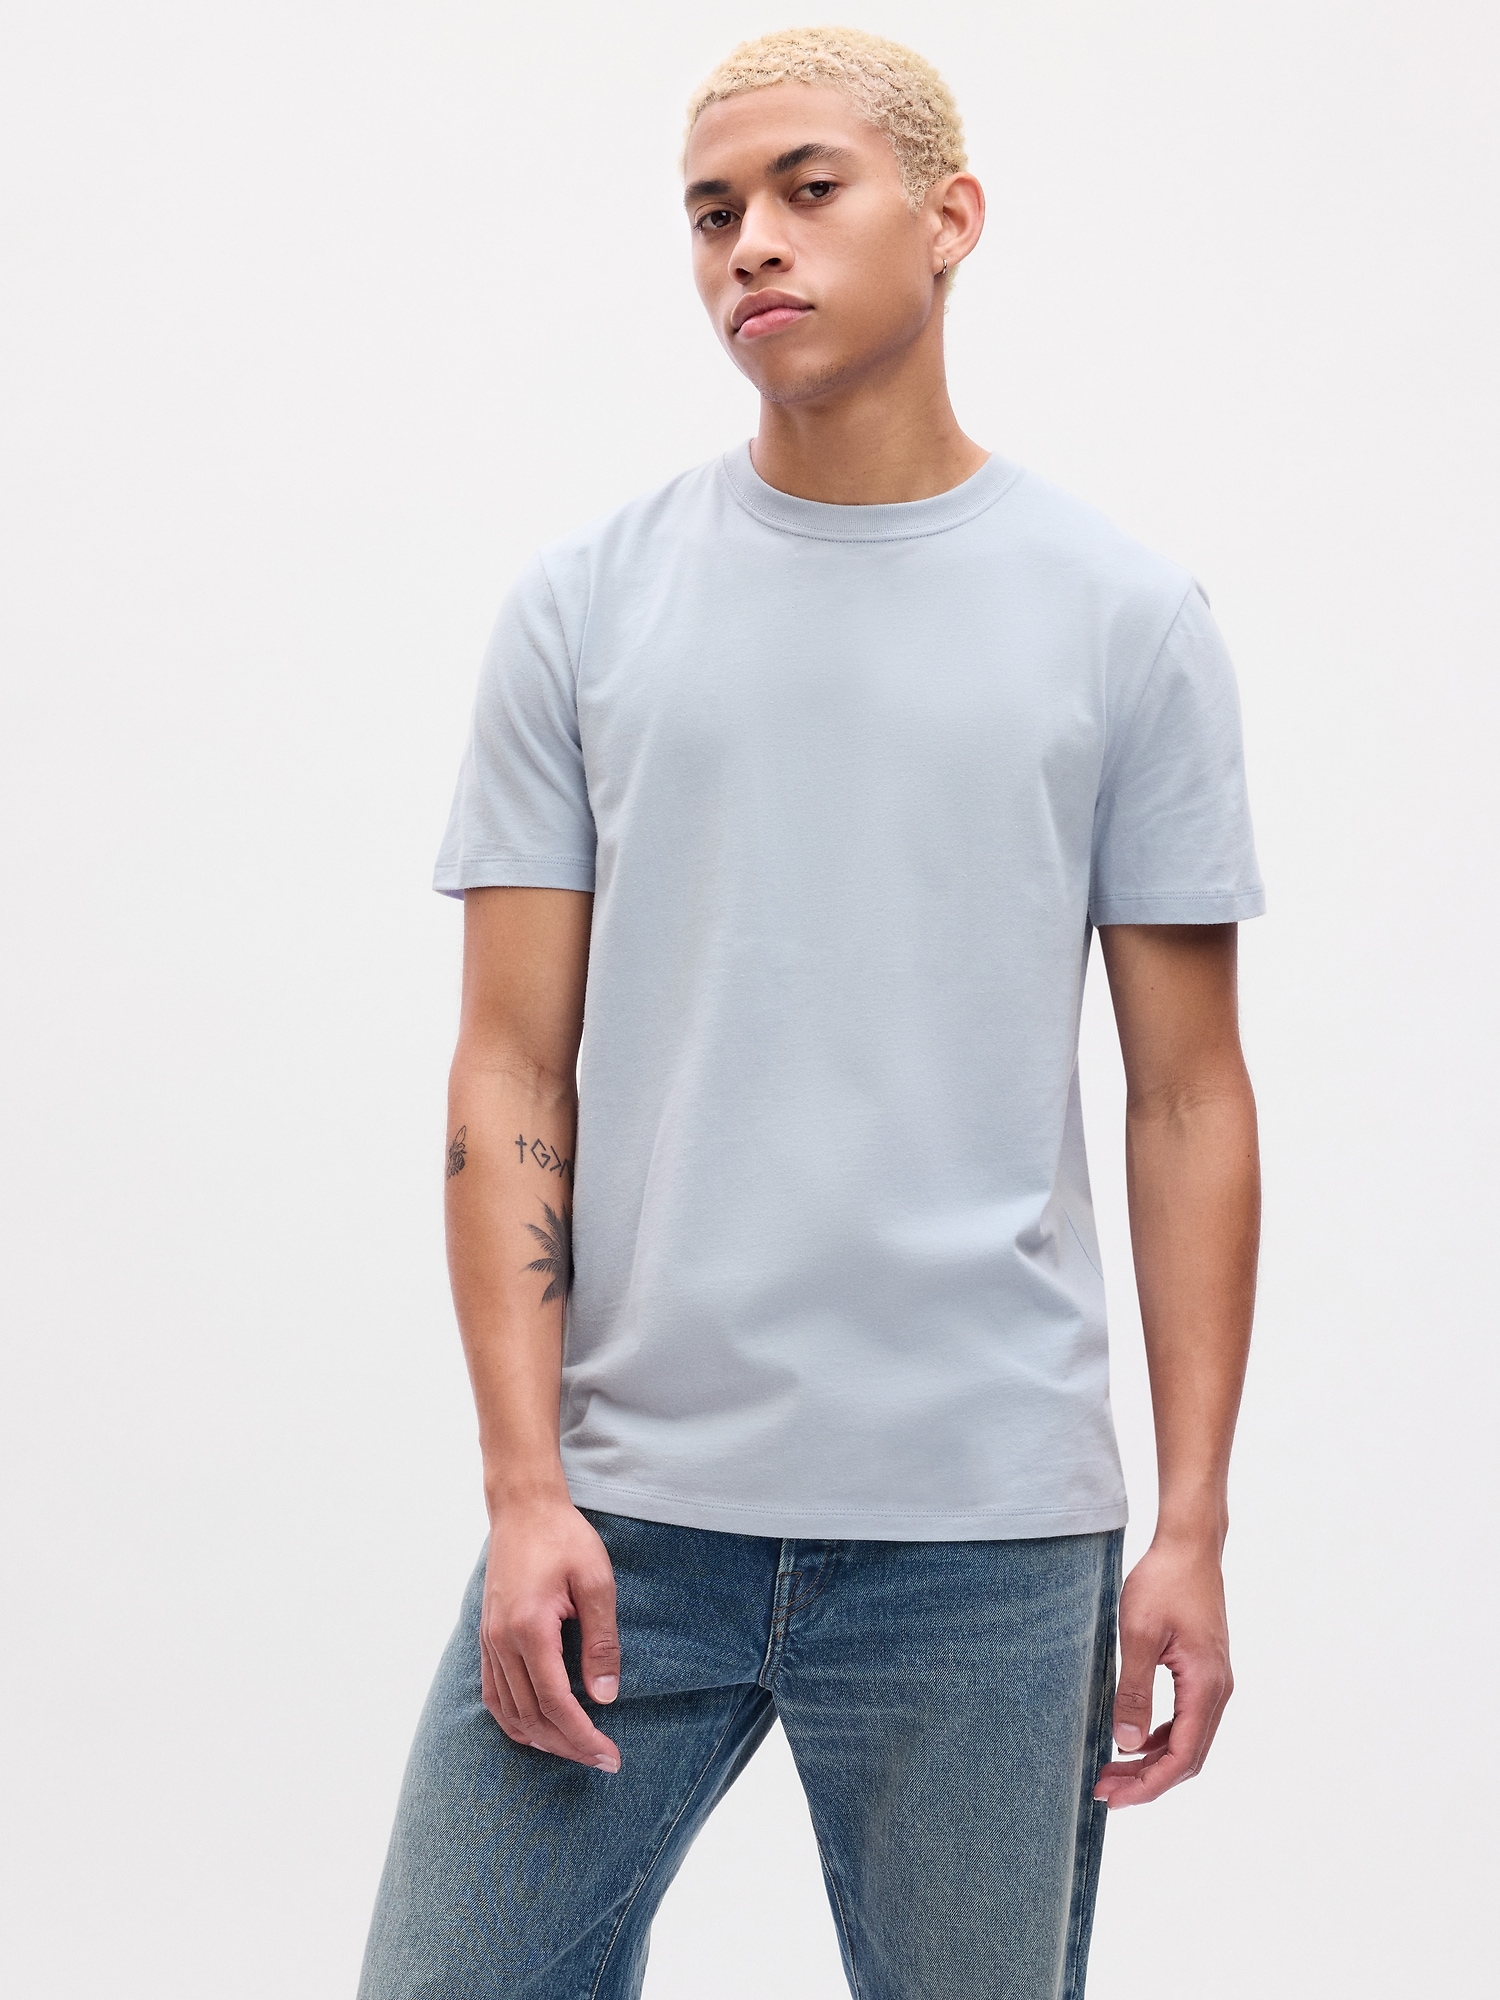 Relaxed Fit Short-sleeved Cotton Shirt - Light gray/bugs - Men